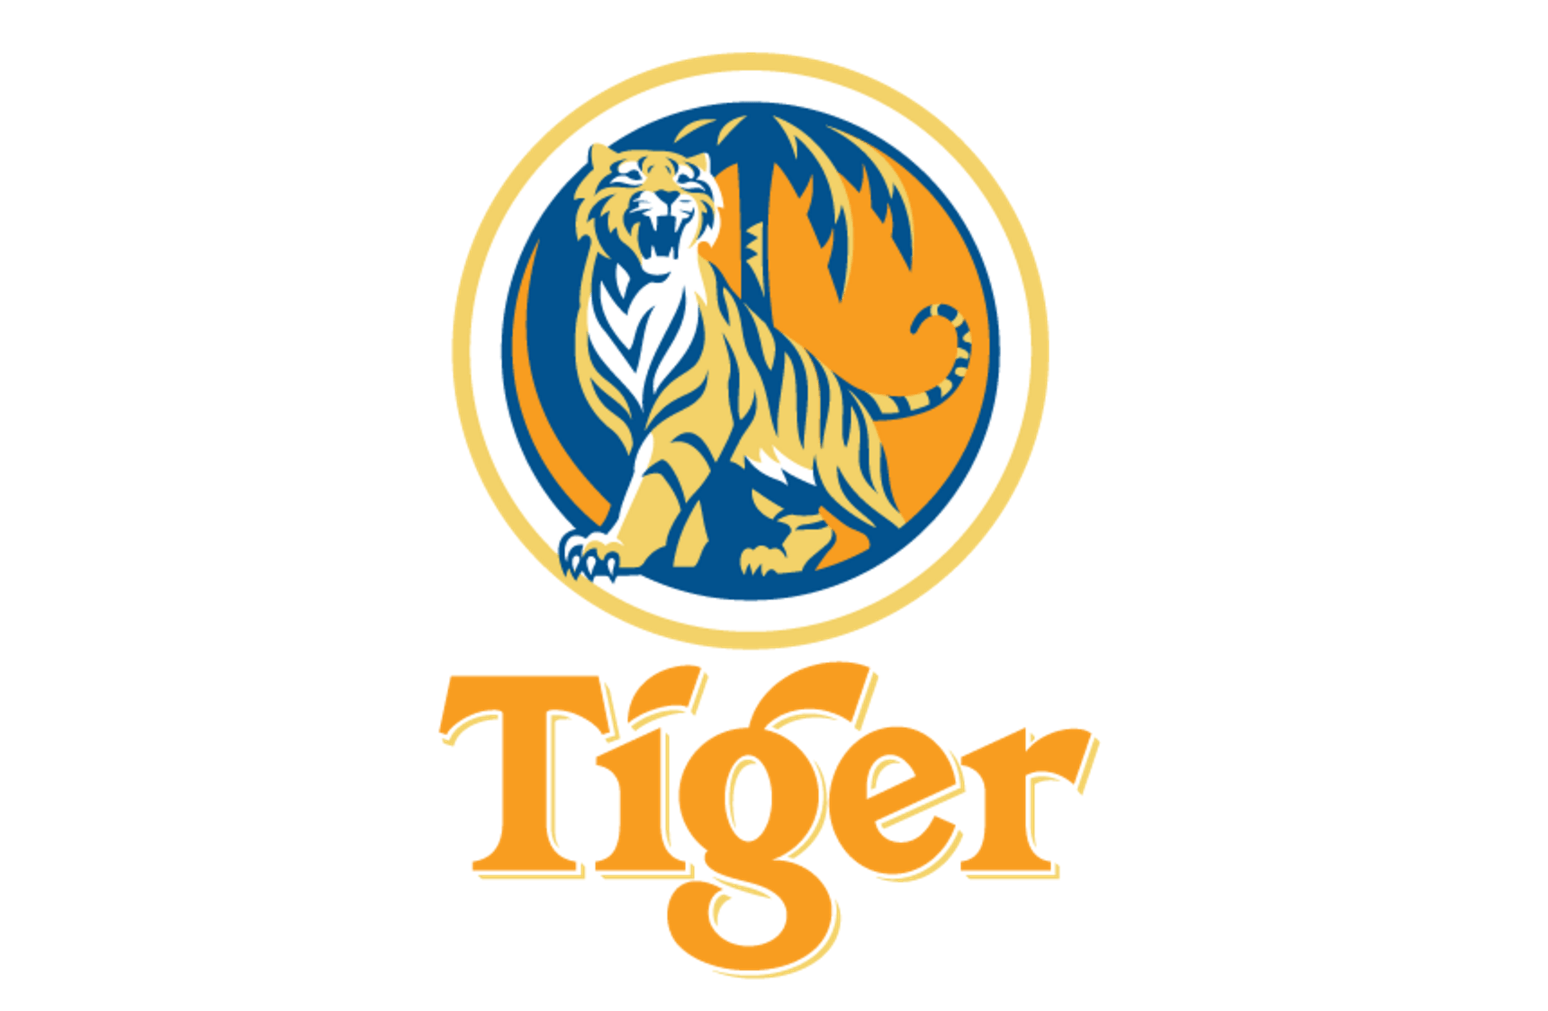 Draught Beer Logo - Download Tiger Beer vector logo (.EPS + .AI) free